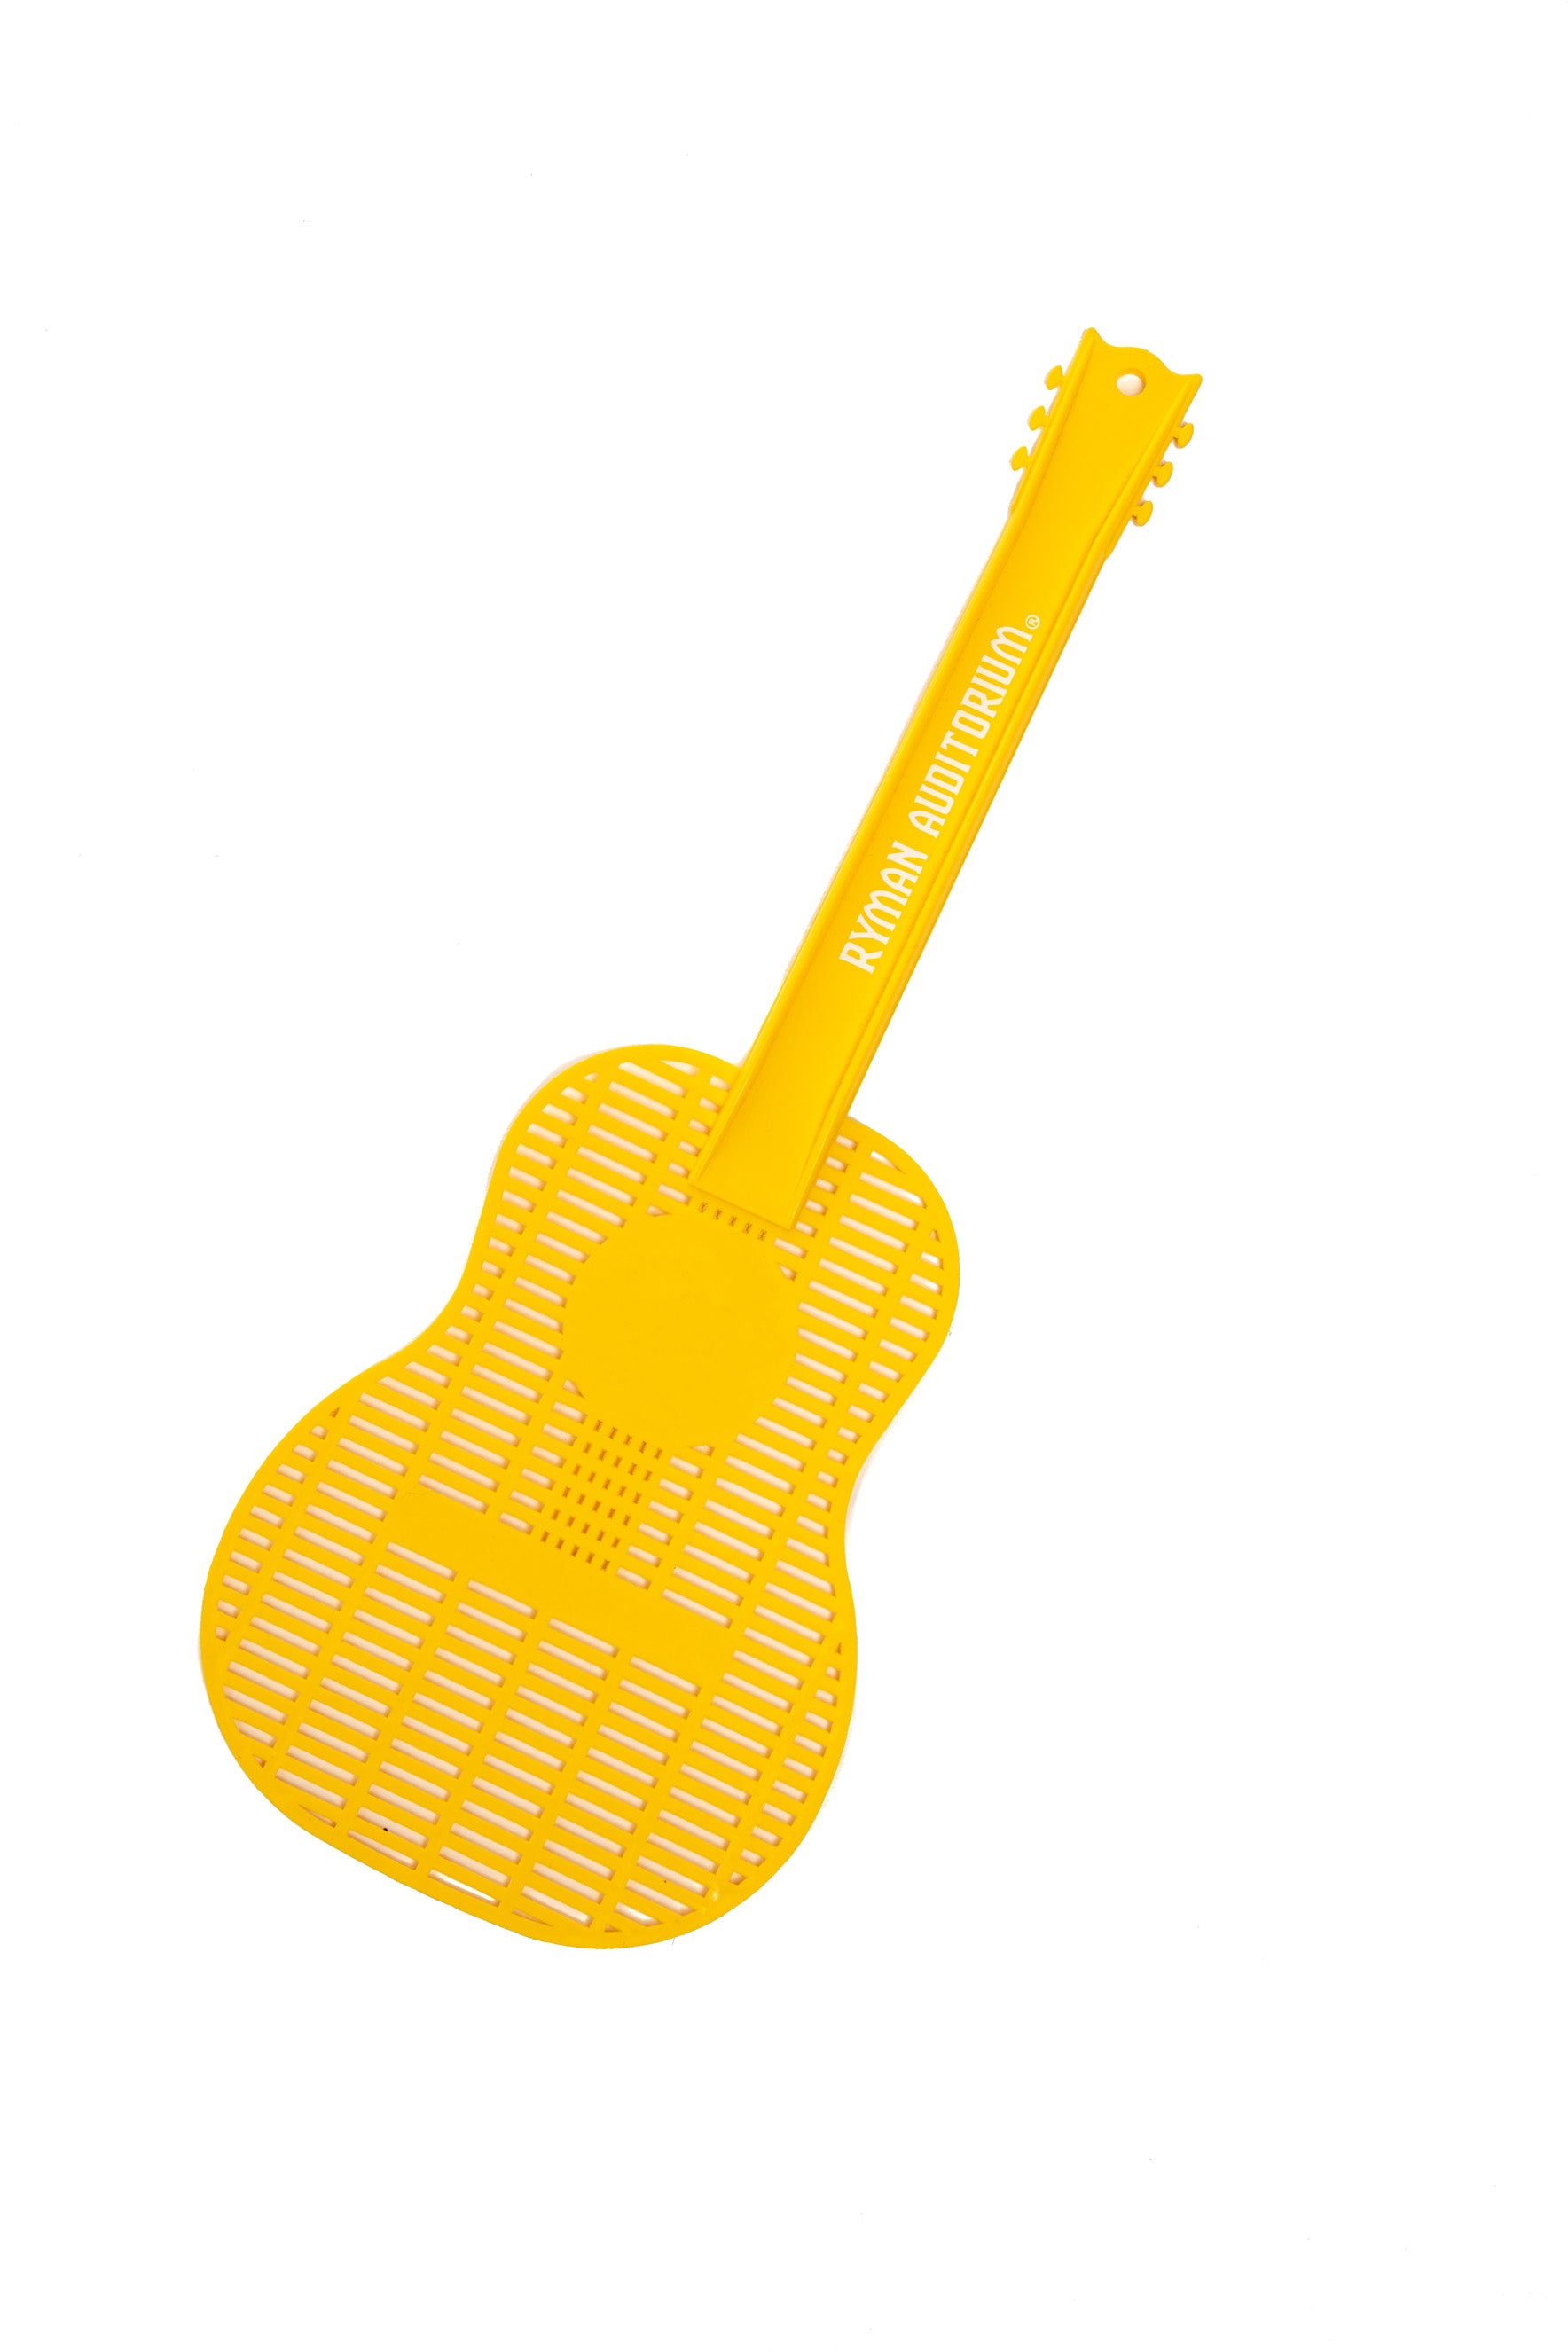 Ryman Guitar Flyswatter